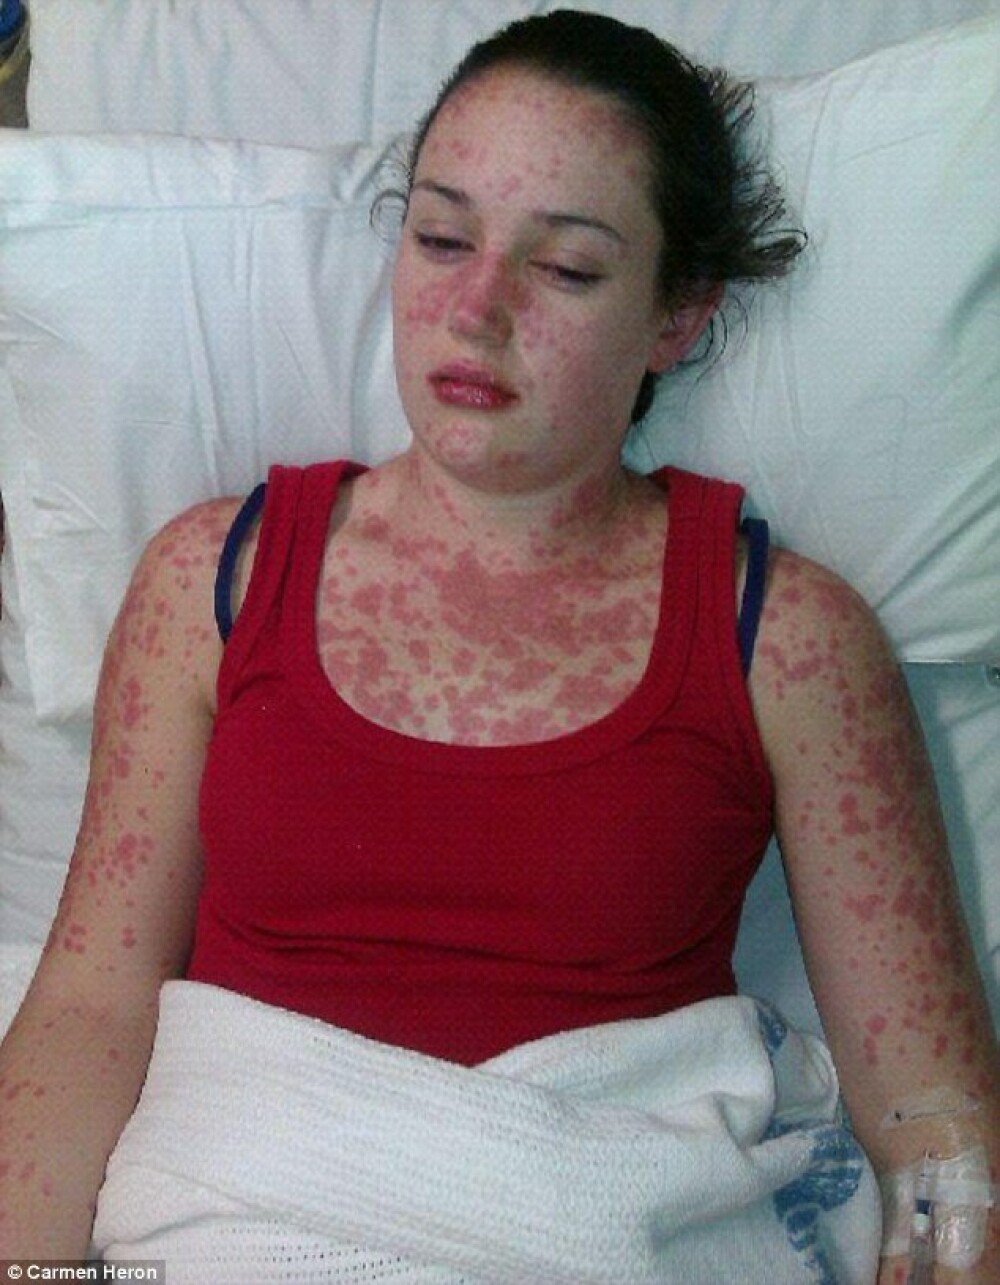 Reactia alergica la un medicament a transformat-o intr-o mumie. Cum arata tanara de 19 ani inainte de boala - Imaginea 3